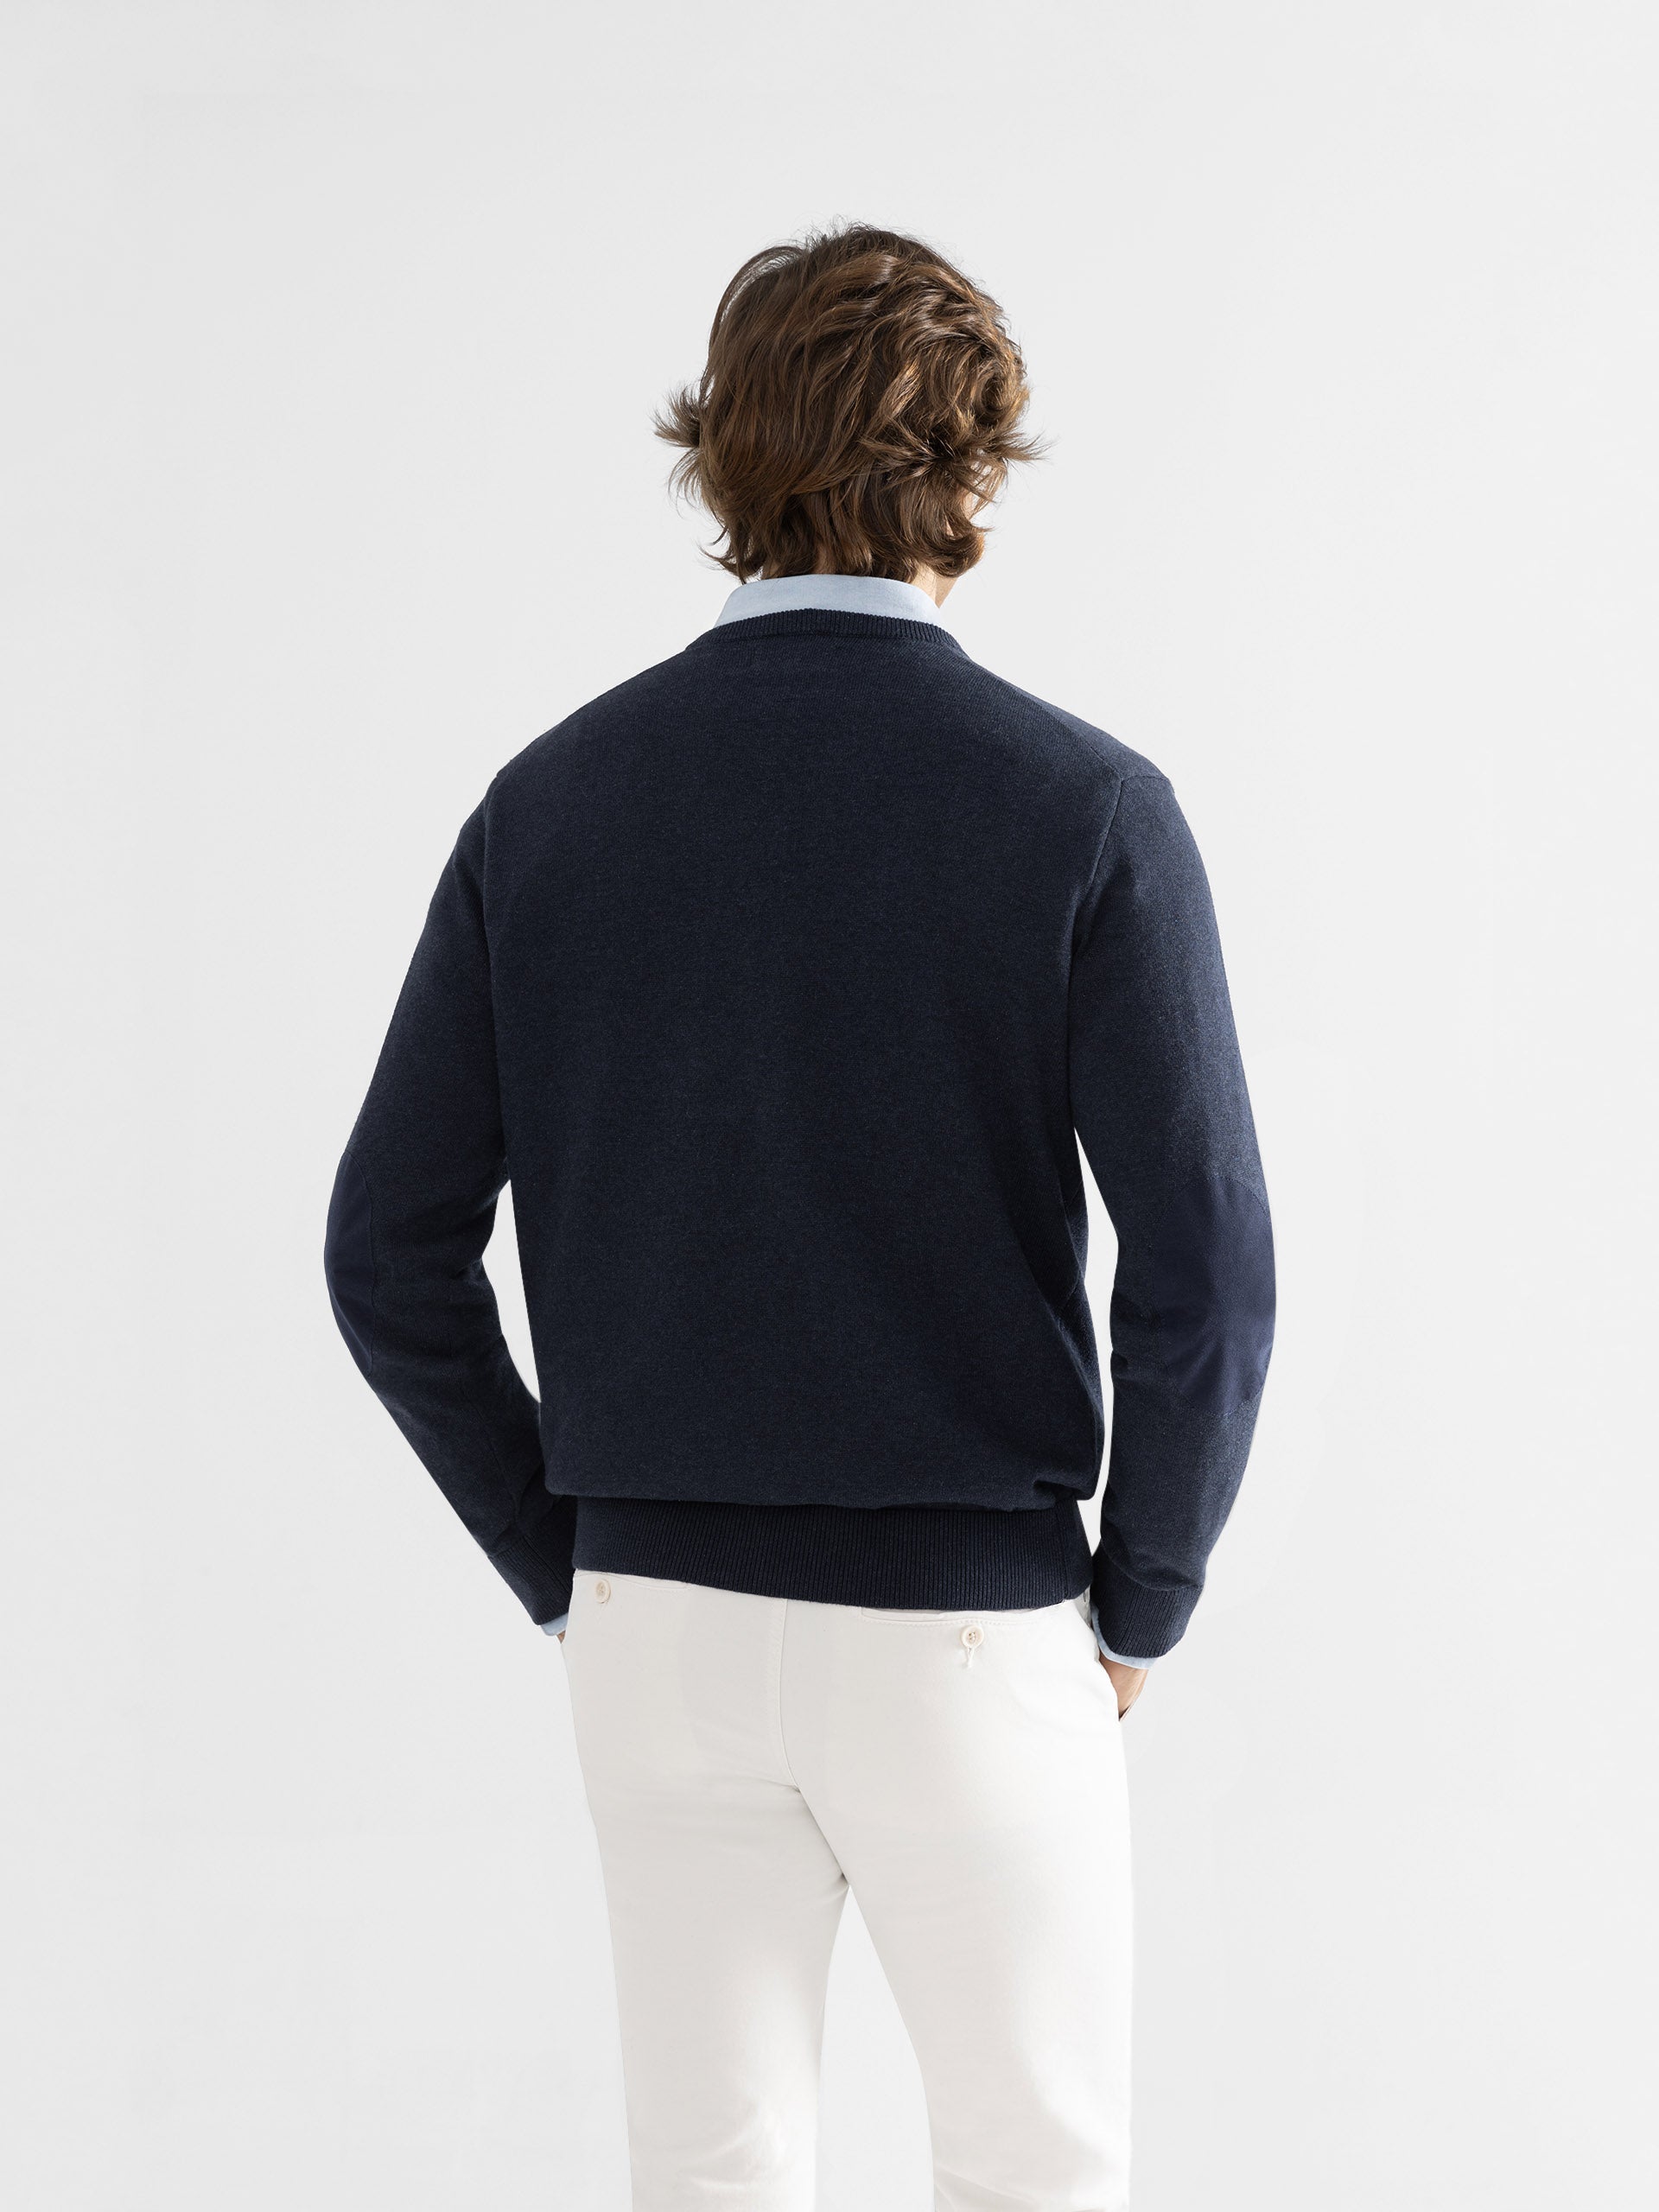 Plain navy blue elbow sleeve sweater